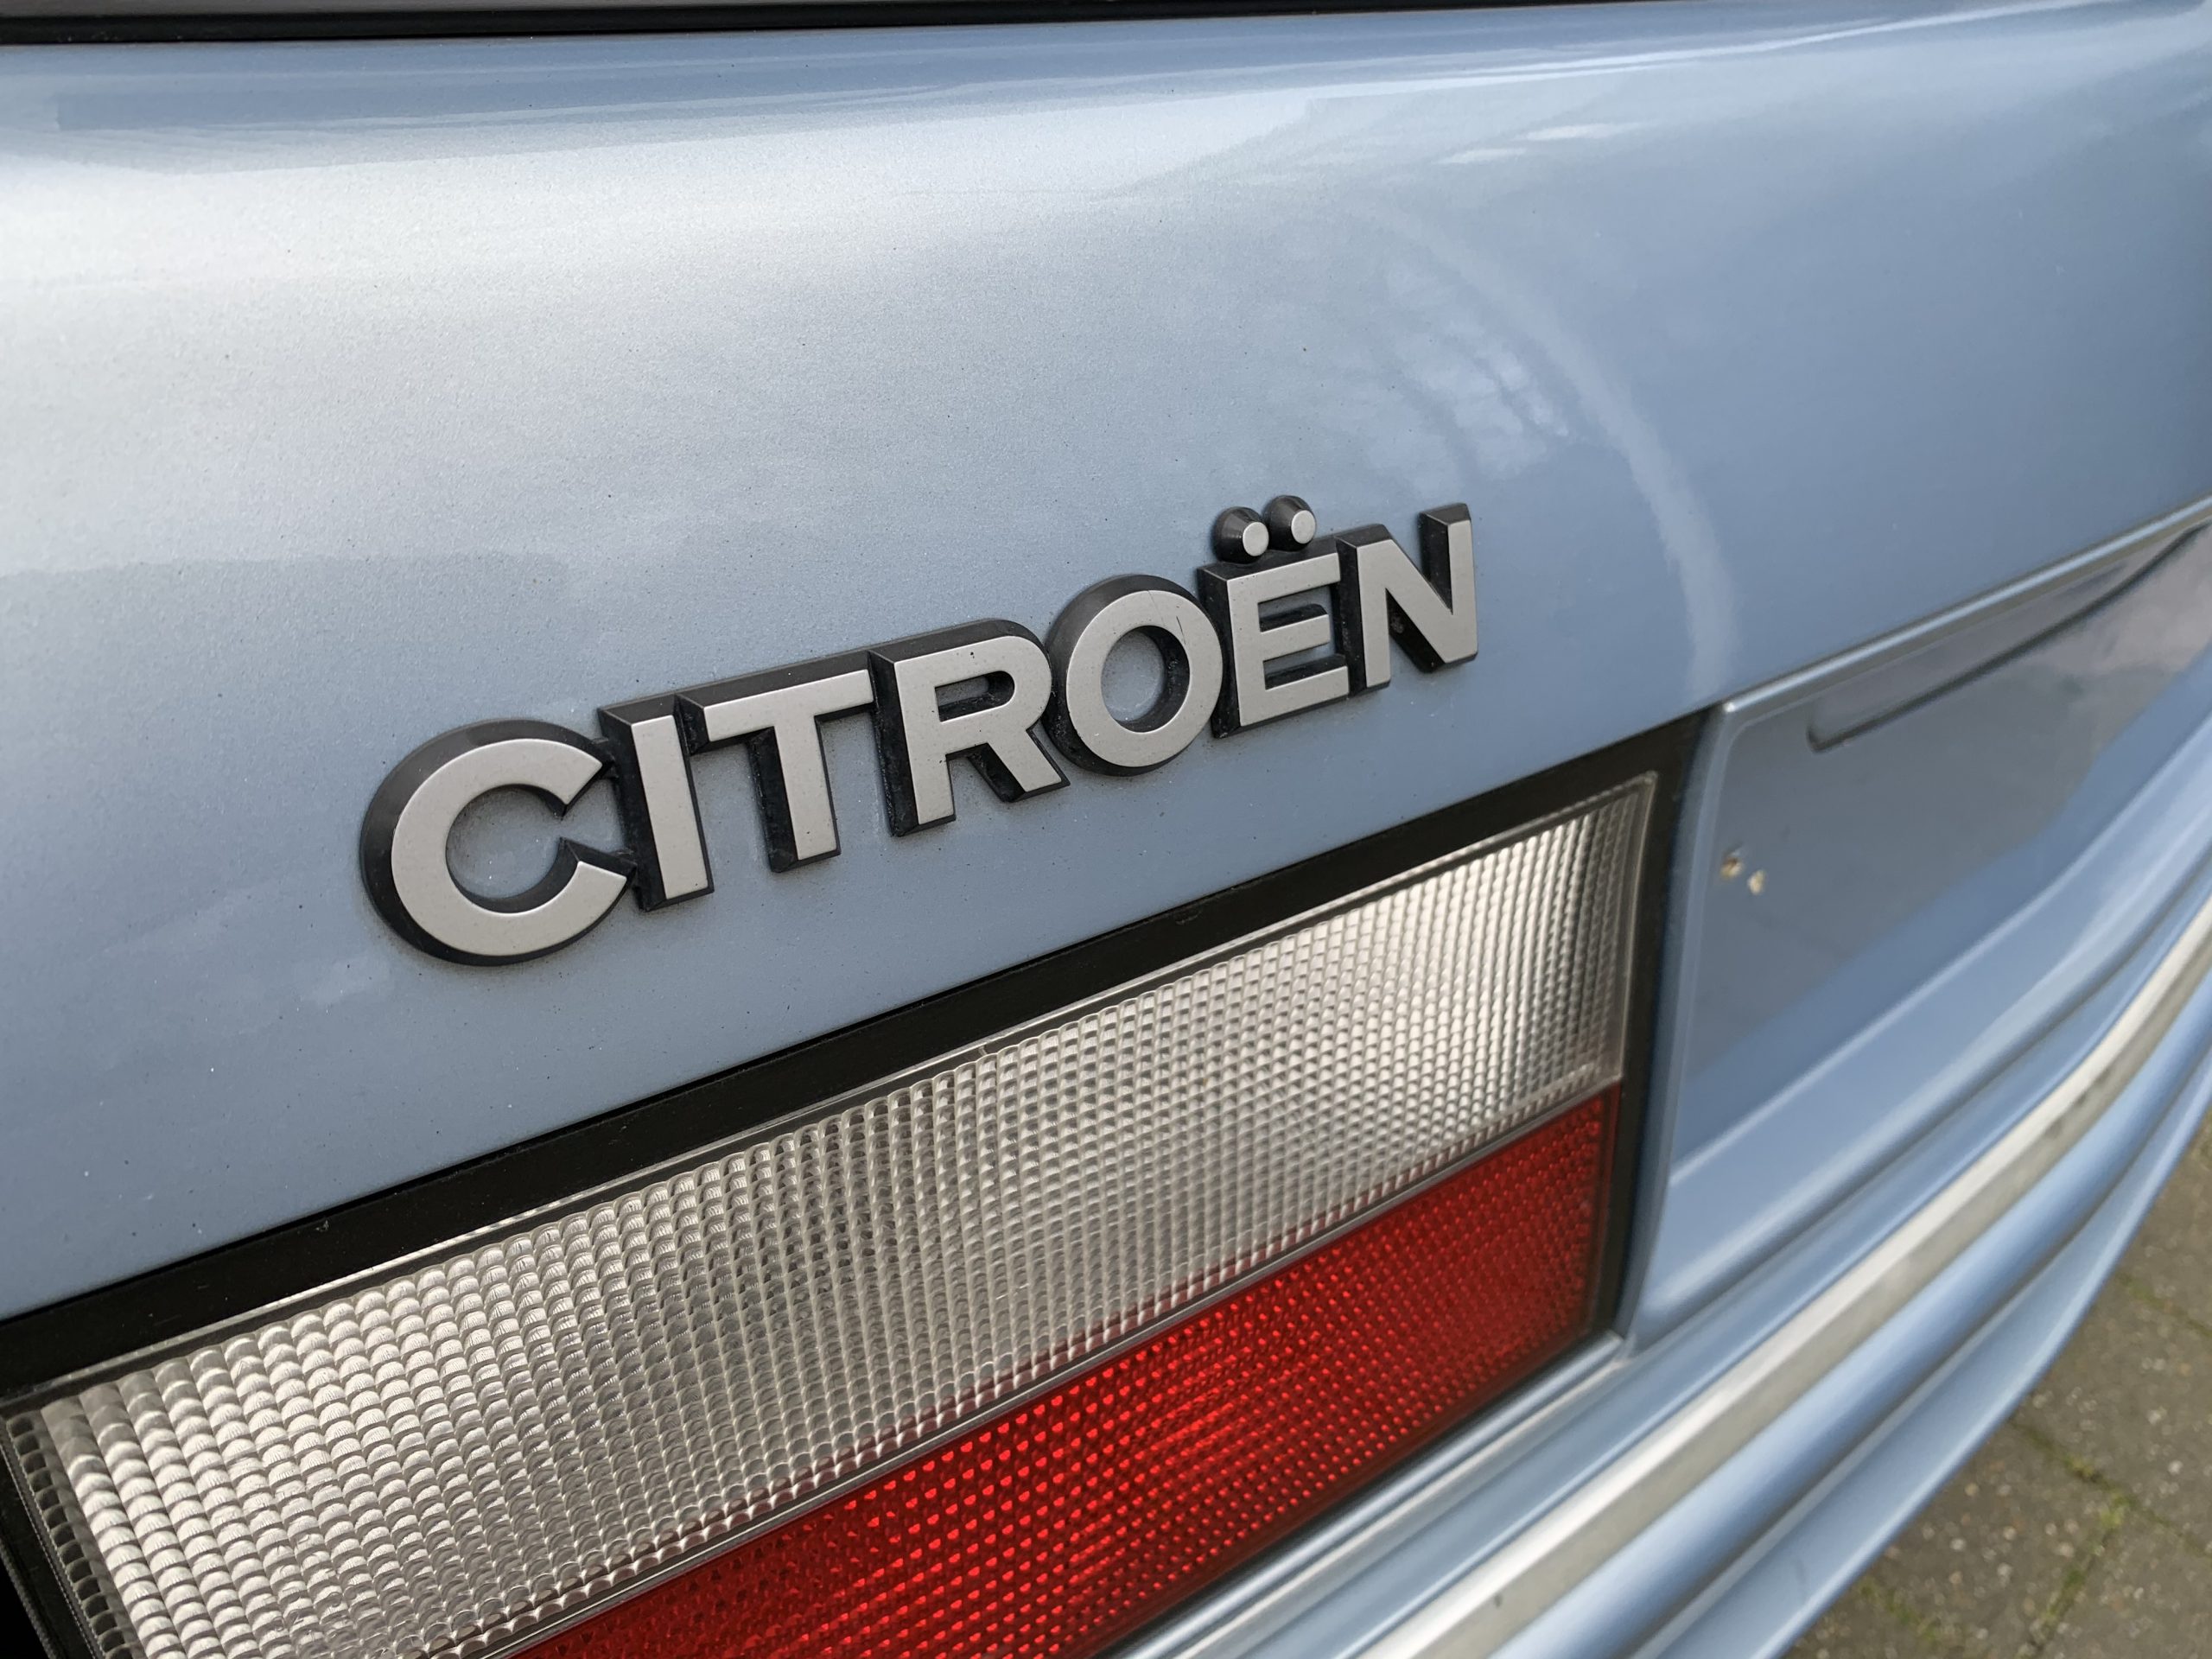 Citroën Xantia Break 1.8i 16v